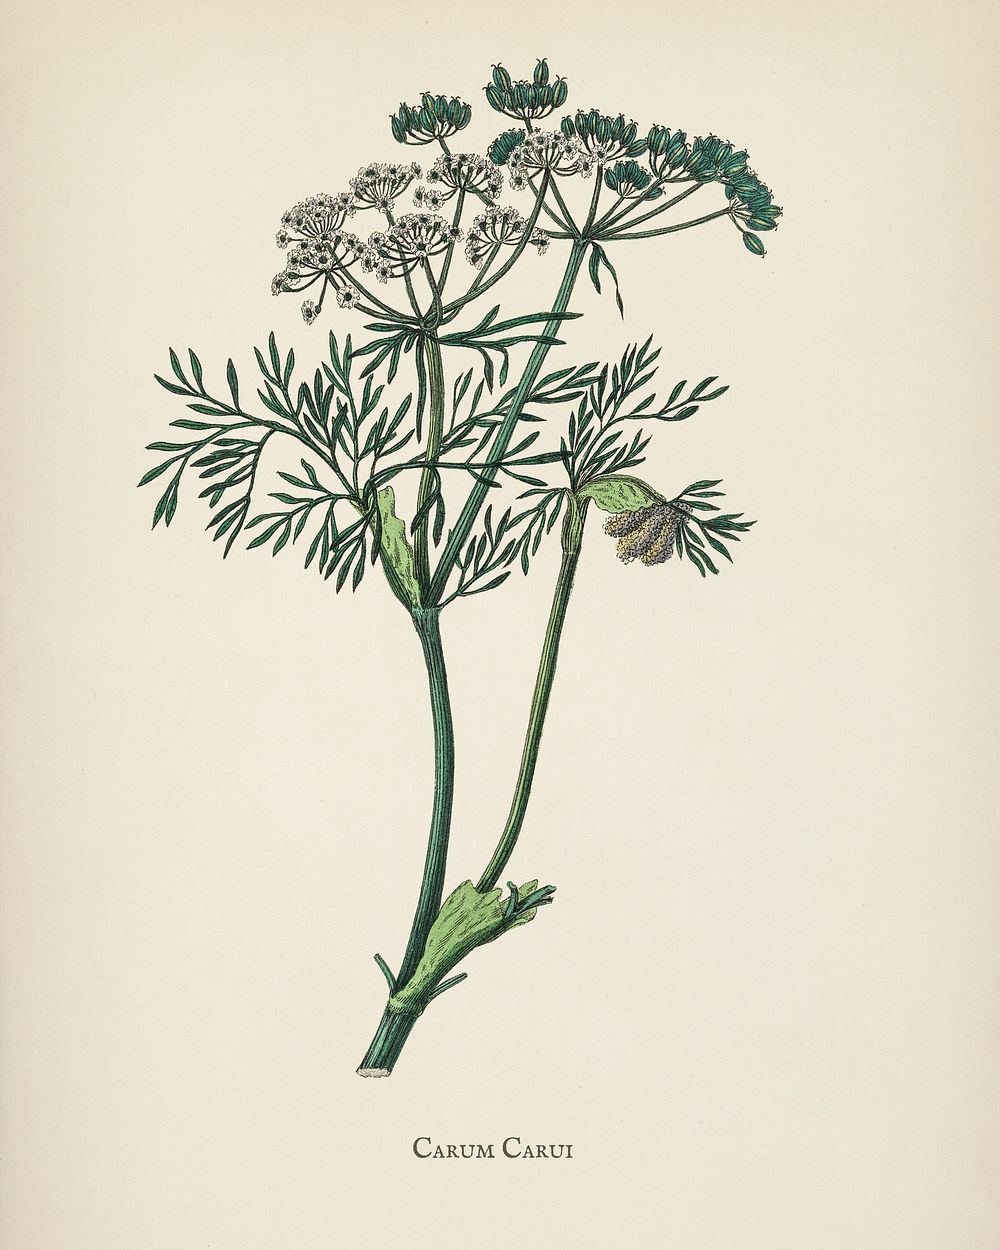 Caraway (Carum carui) illustration from Medical Botany (1836) by John Stephenson and James Morss Churchill.